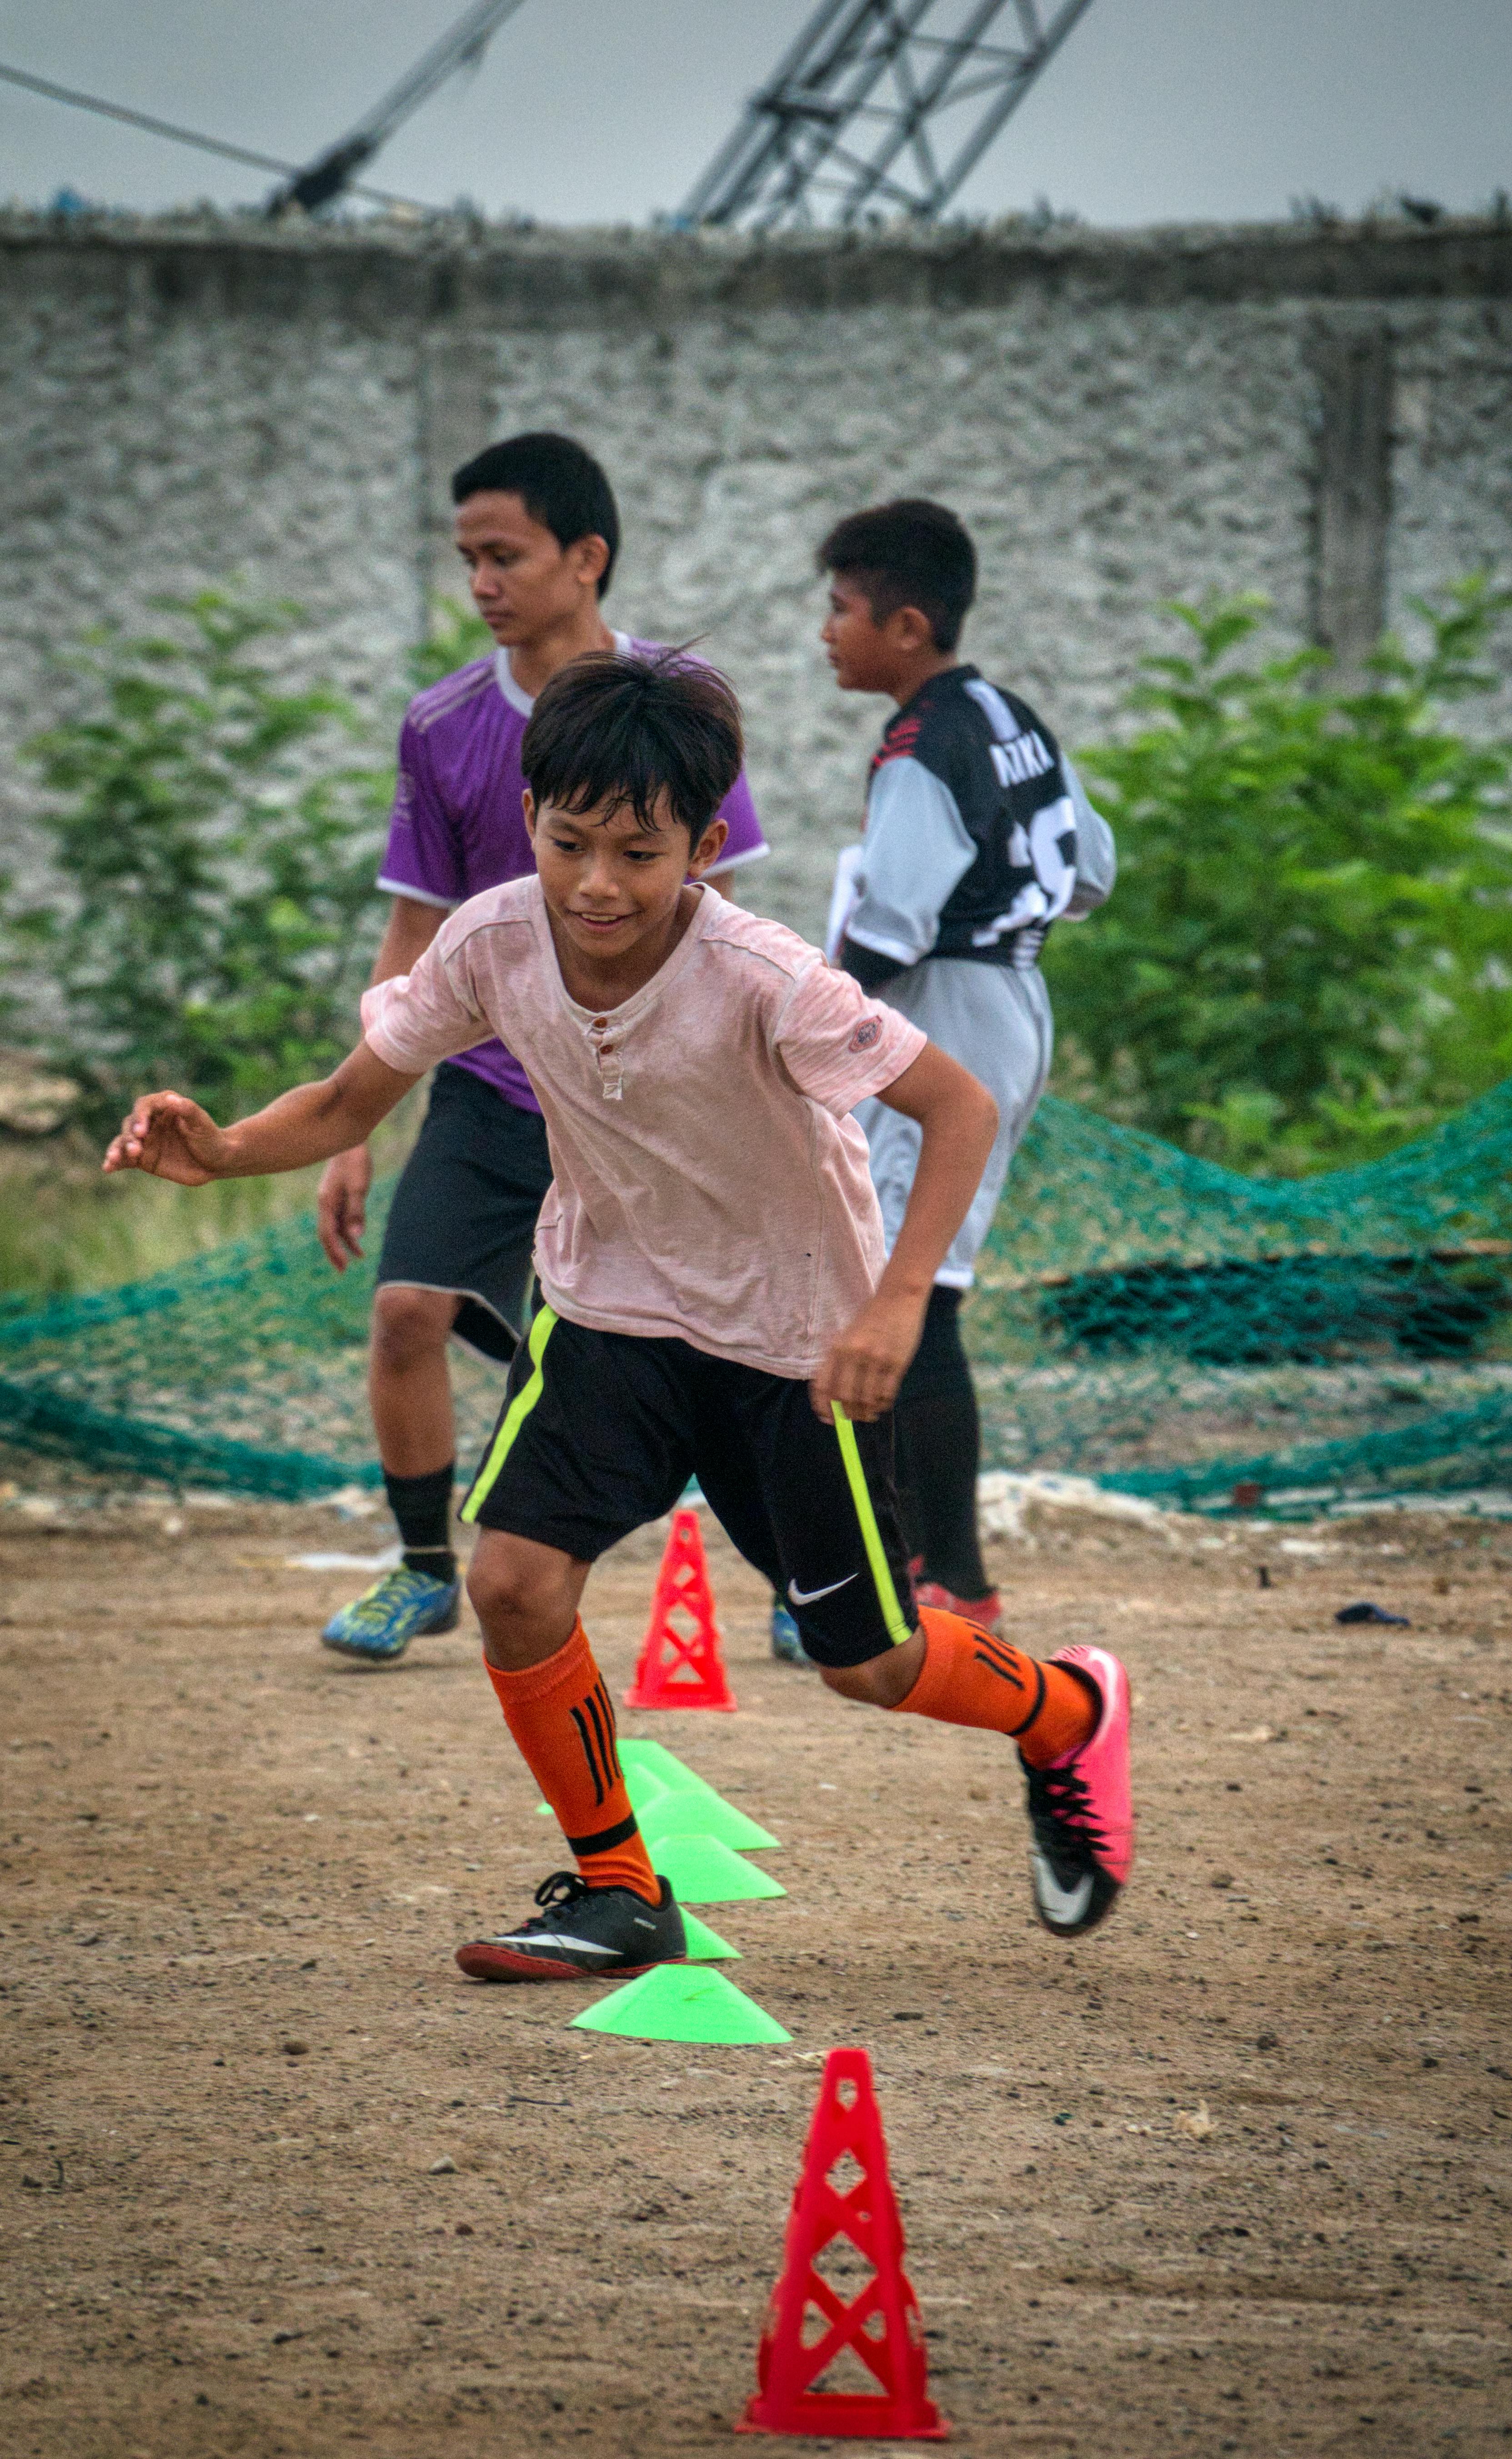 ethnic children training skills on sports ground